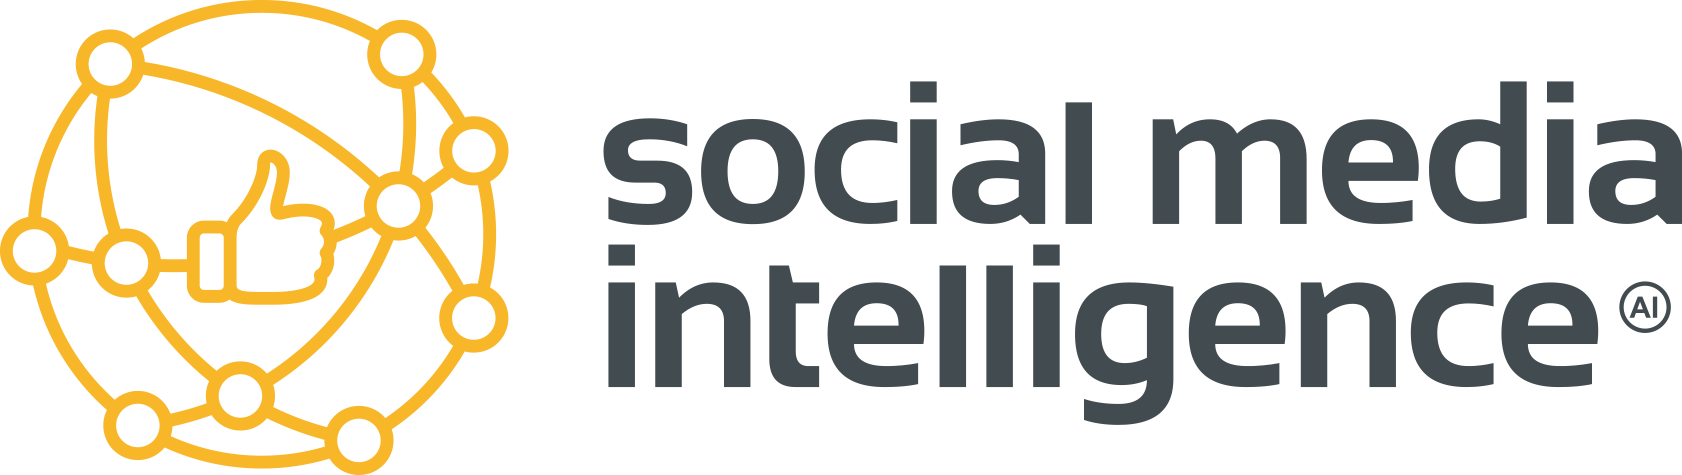 Data Courage - Social Media Intelligence